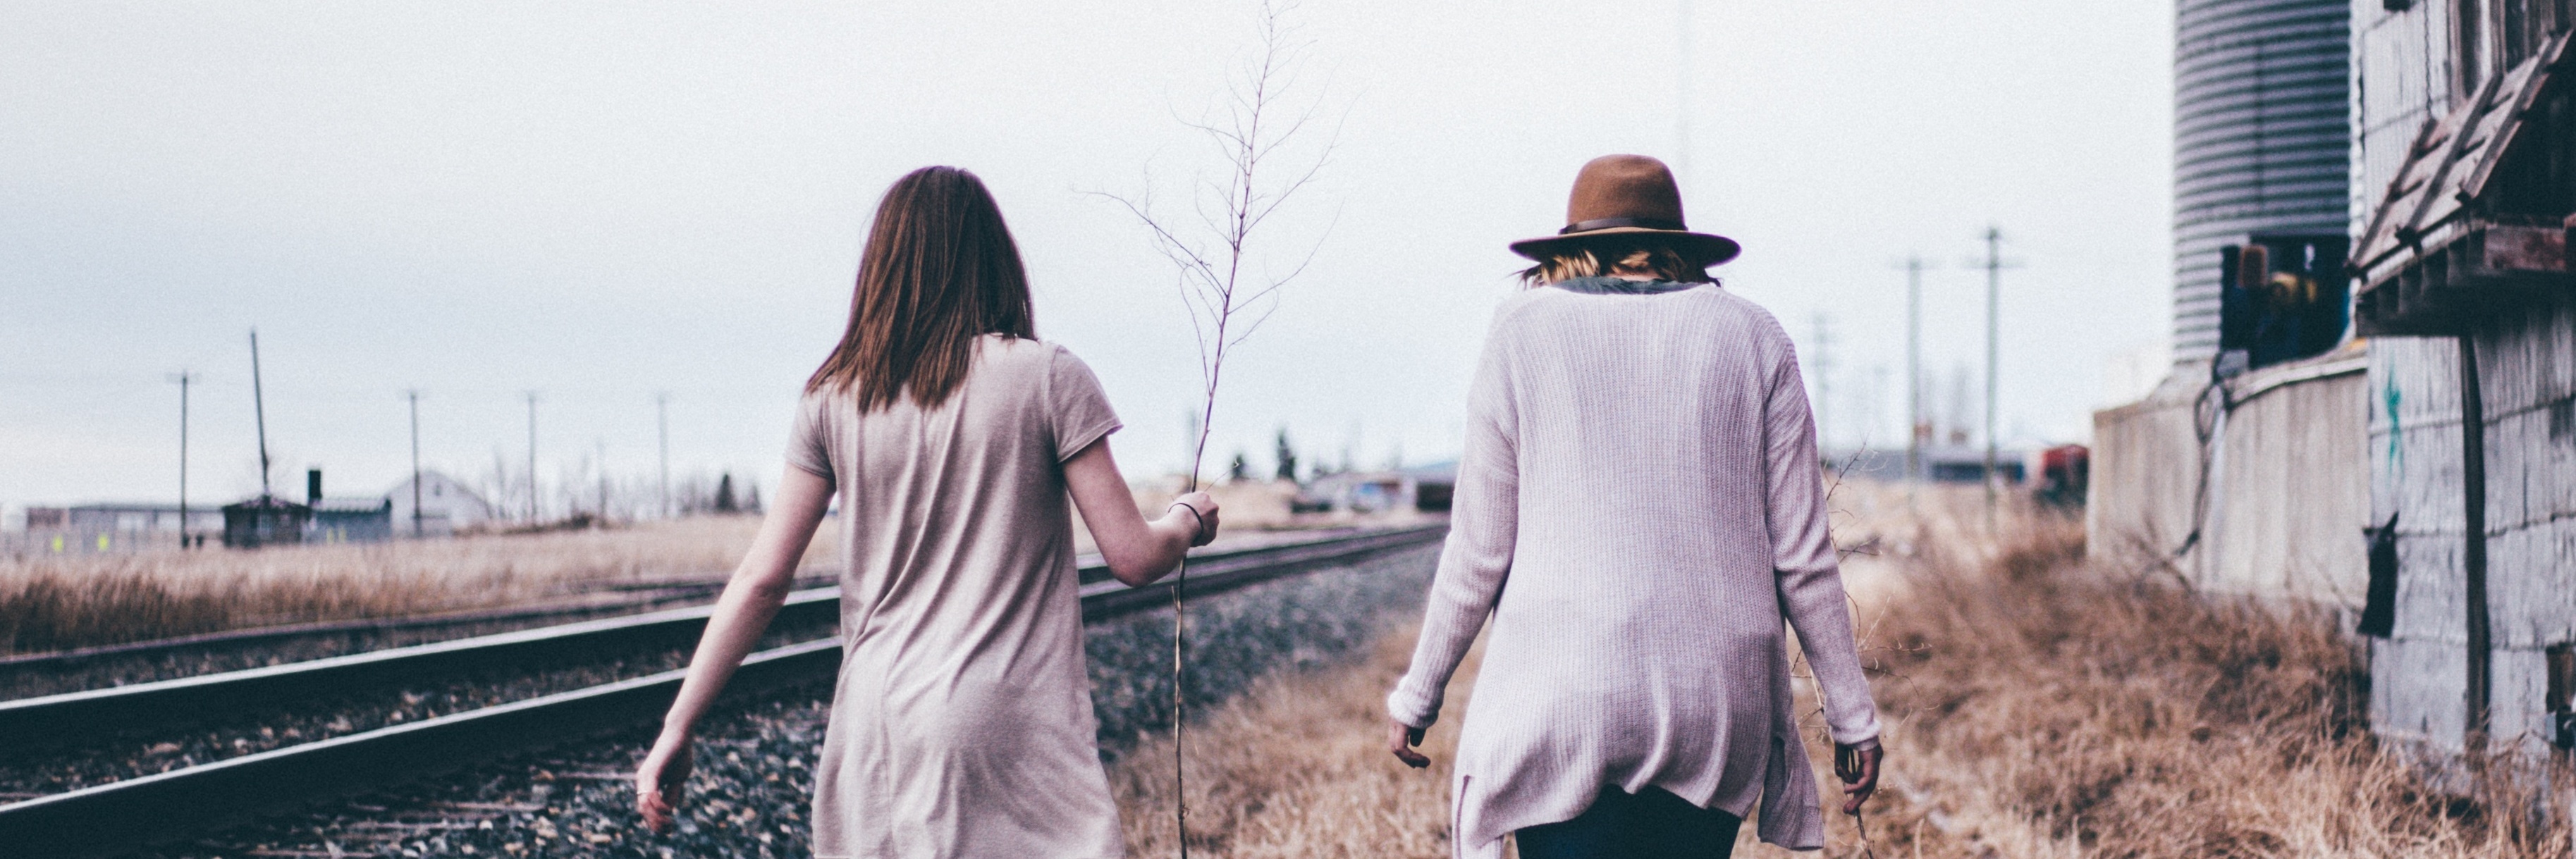 two women friends walking together alongside railway track past derelict house